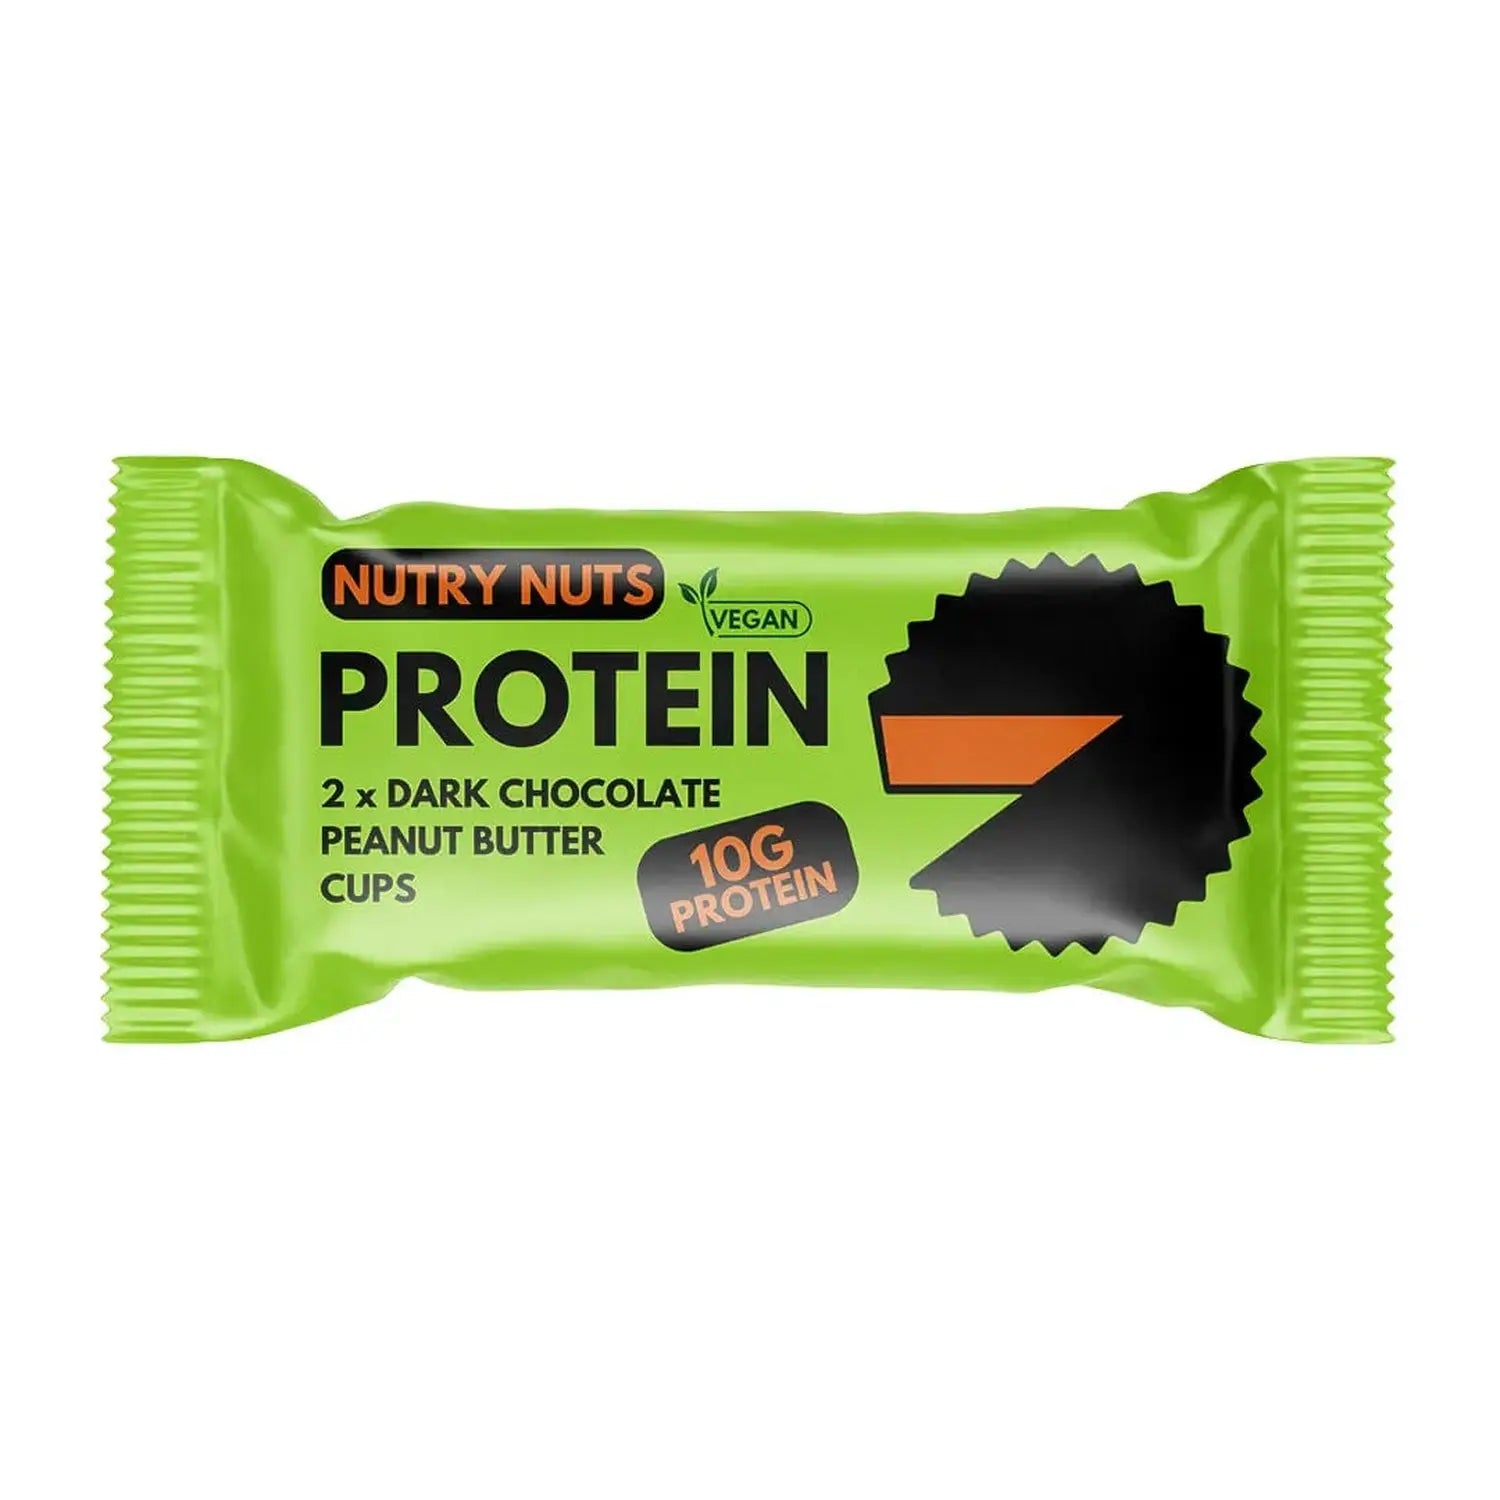 Nutry Nuts Nutry Nuts - Protein Peanut Butter Cups 42 g Dark Chocolate kaufen bei HighPowered.ch